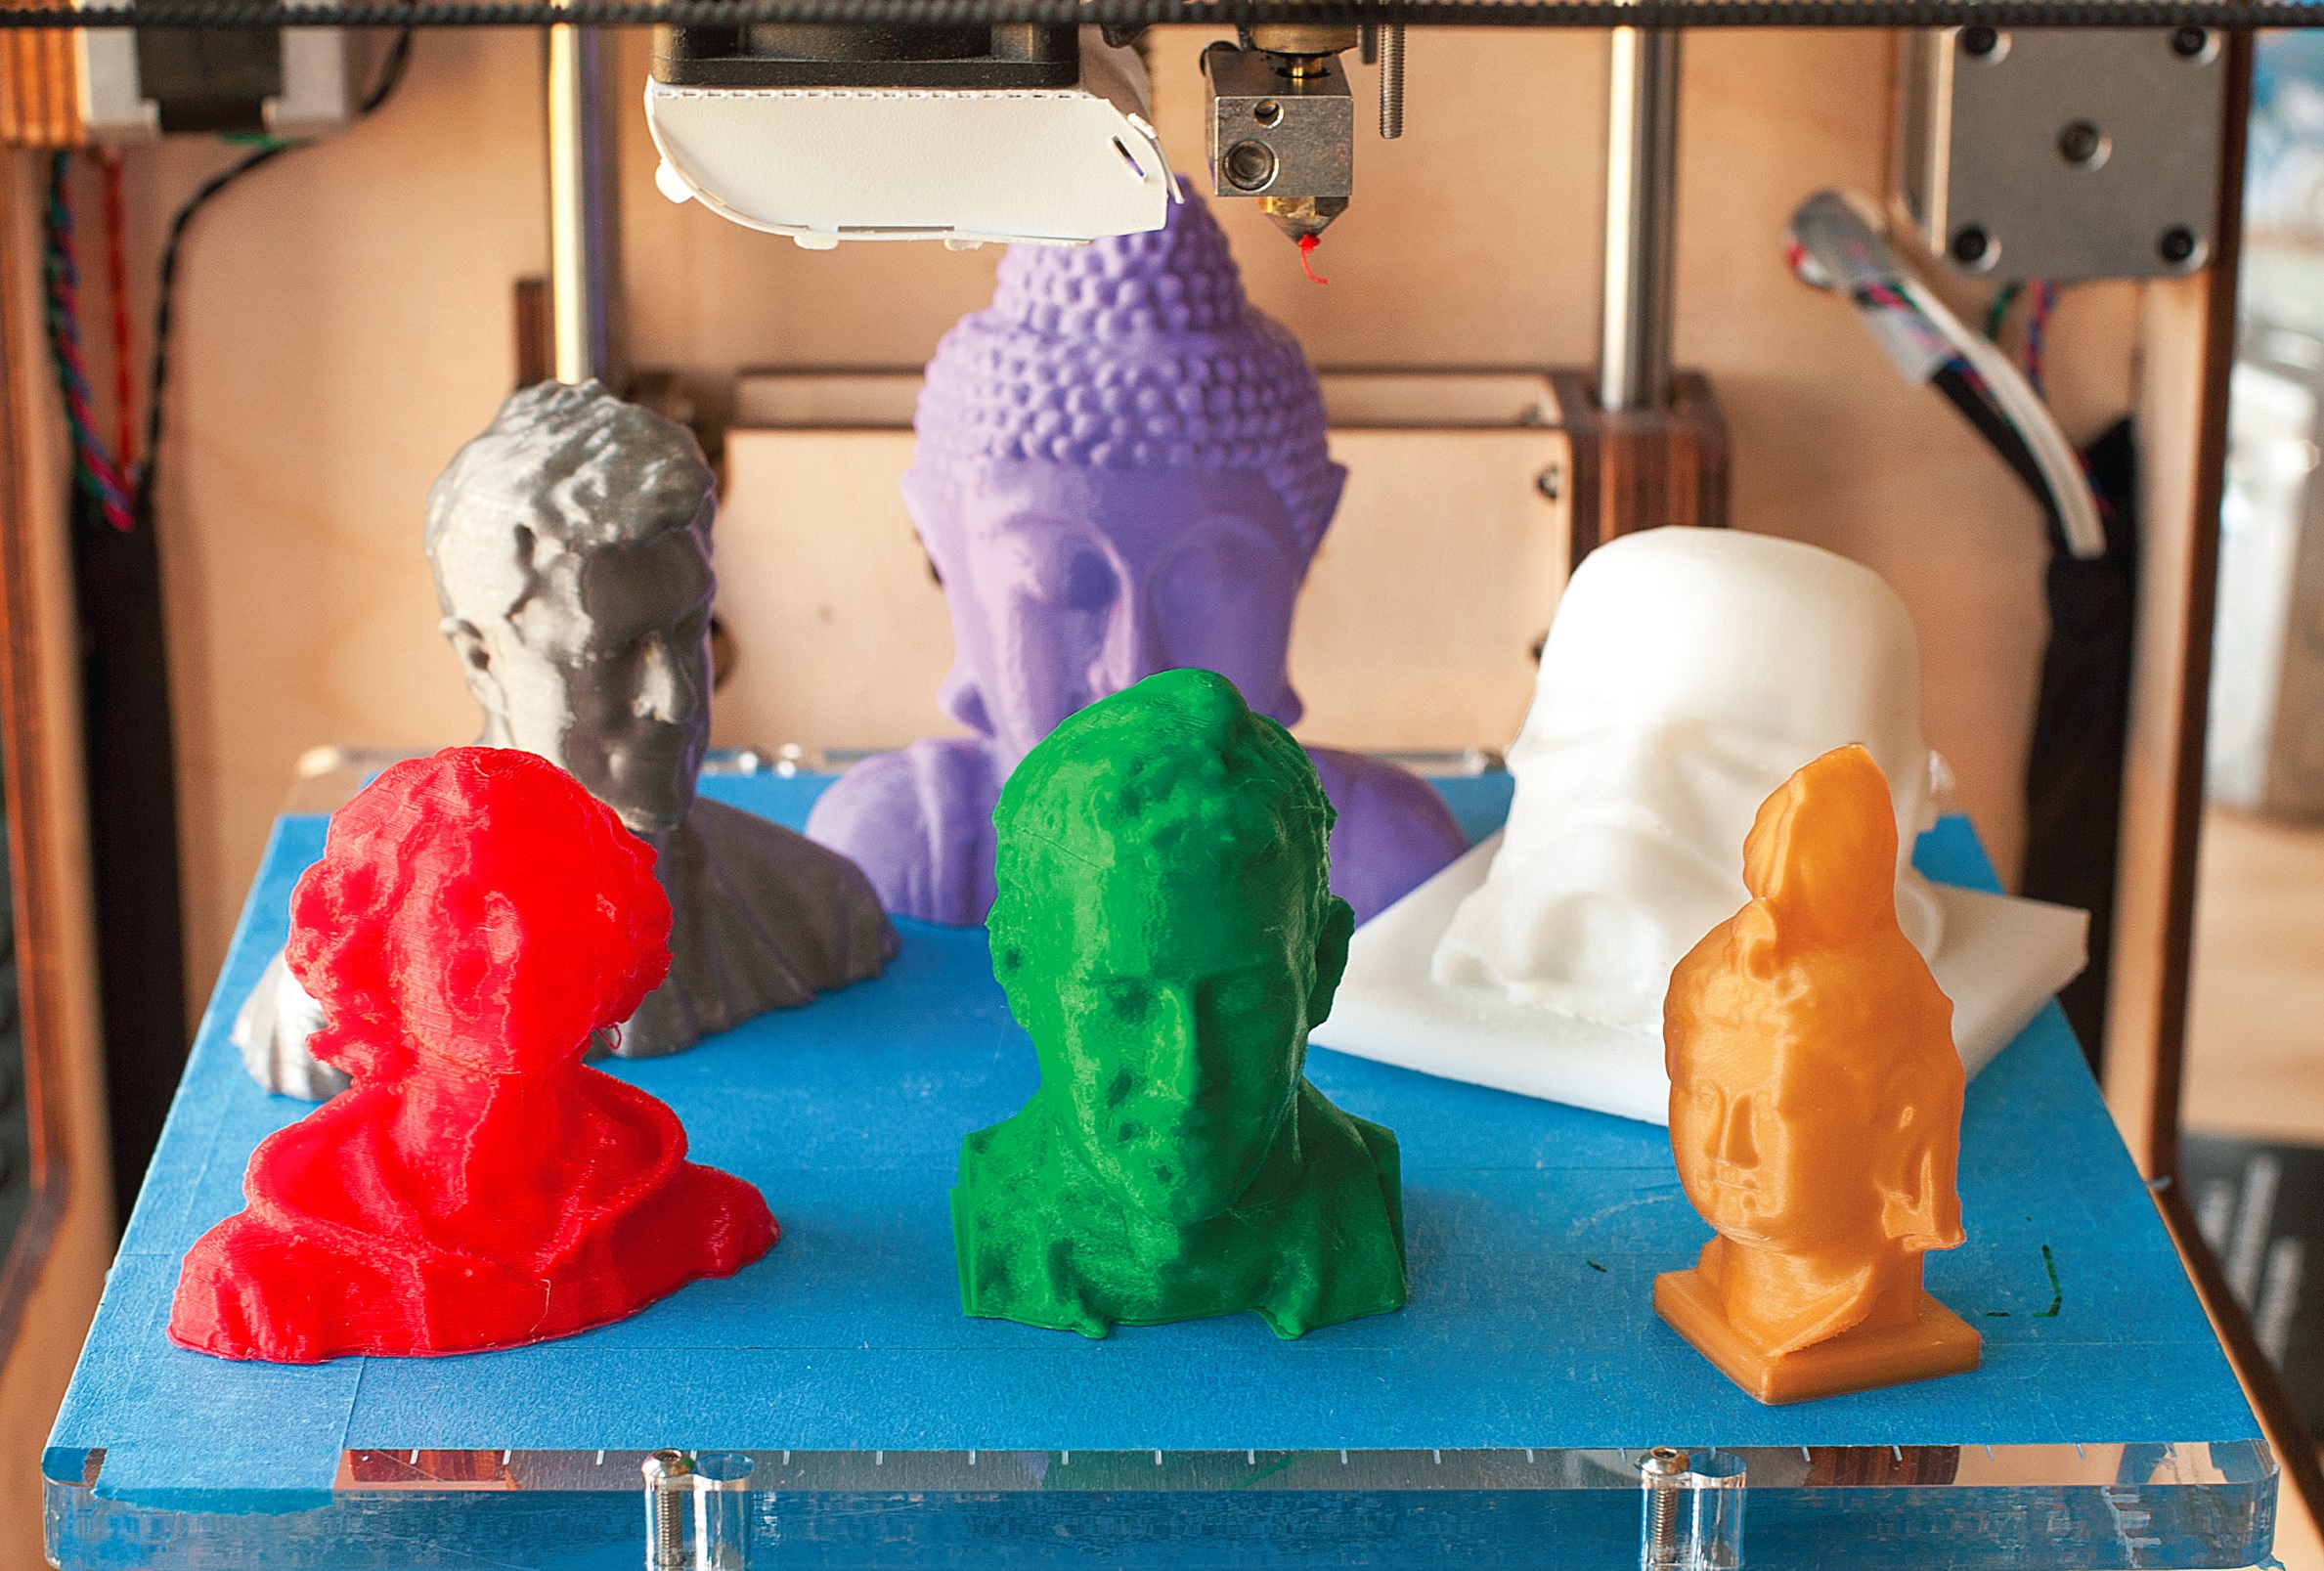 Print a 3D Model of Your Head